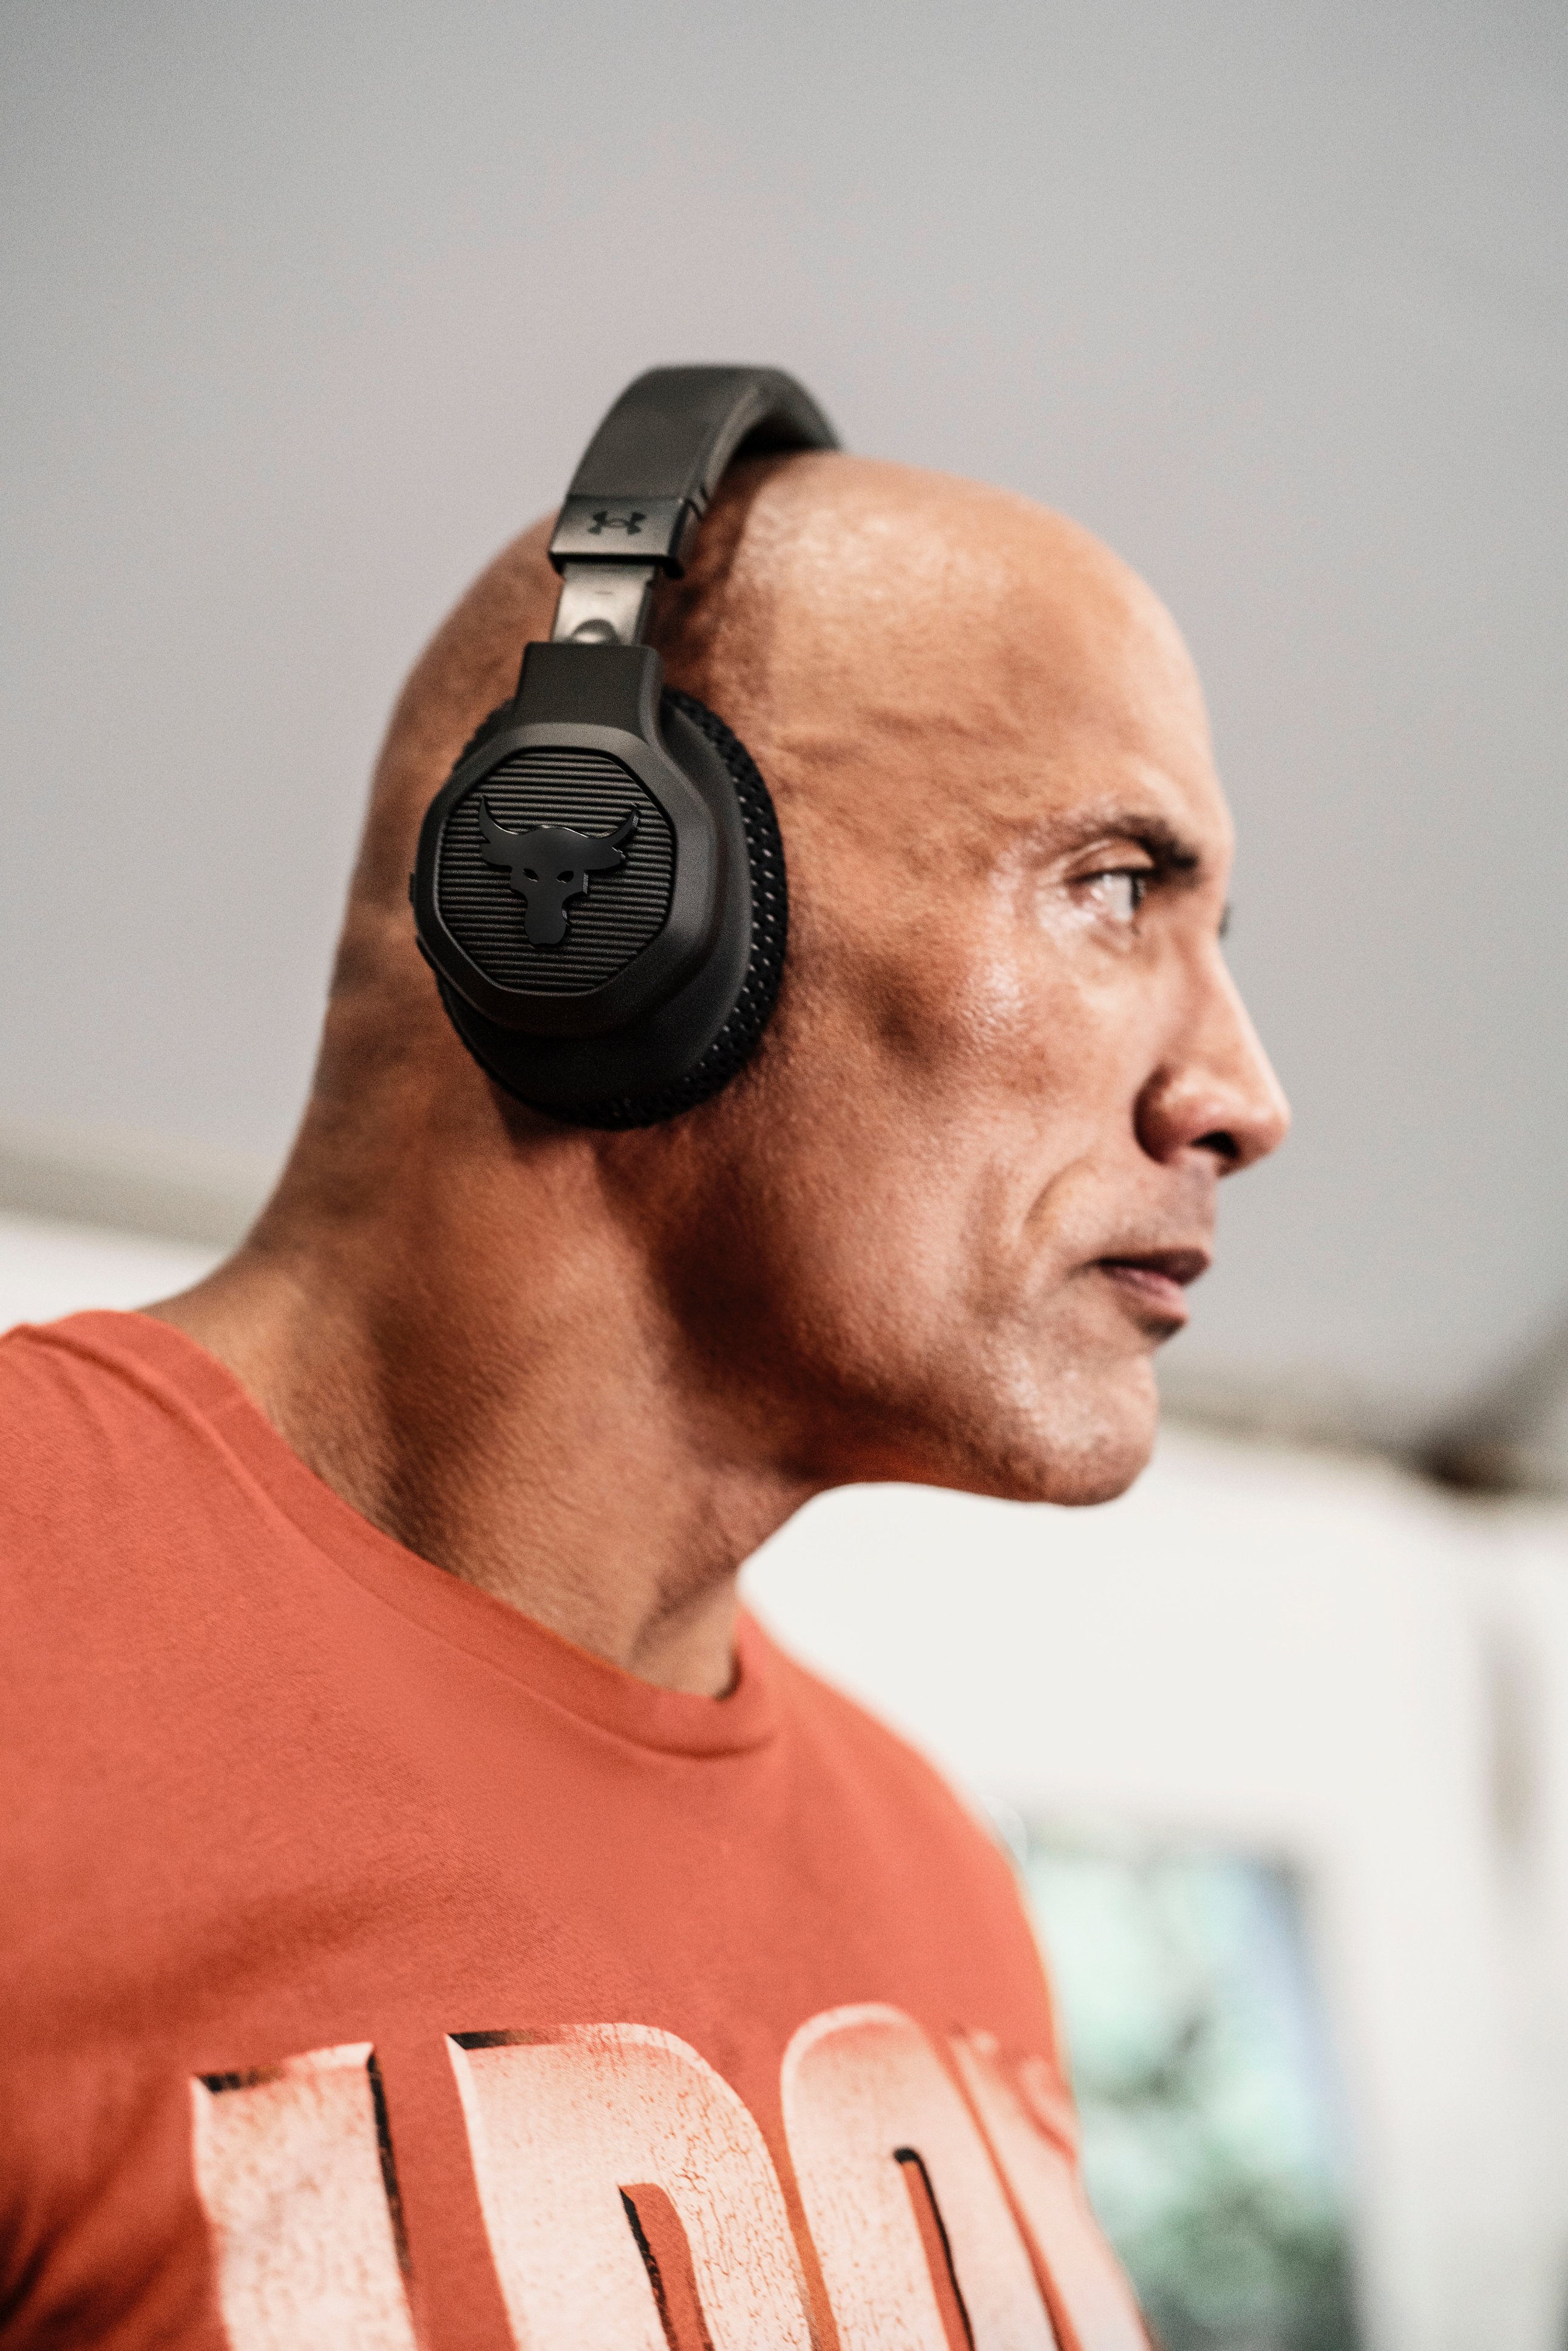 Molestia legumbres ratón Best Buy: JBL Under Armour Project Rock Wireless Over-the-Ear Headphones  Black UAROCKOVEREARBTBAM